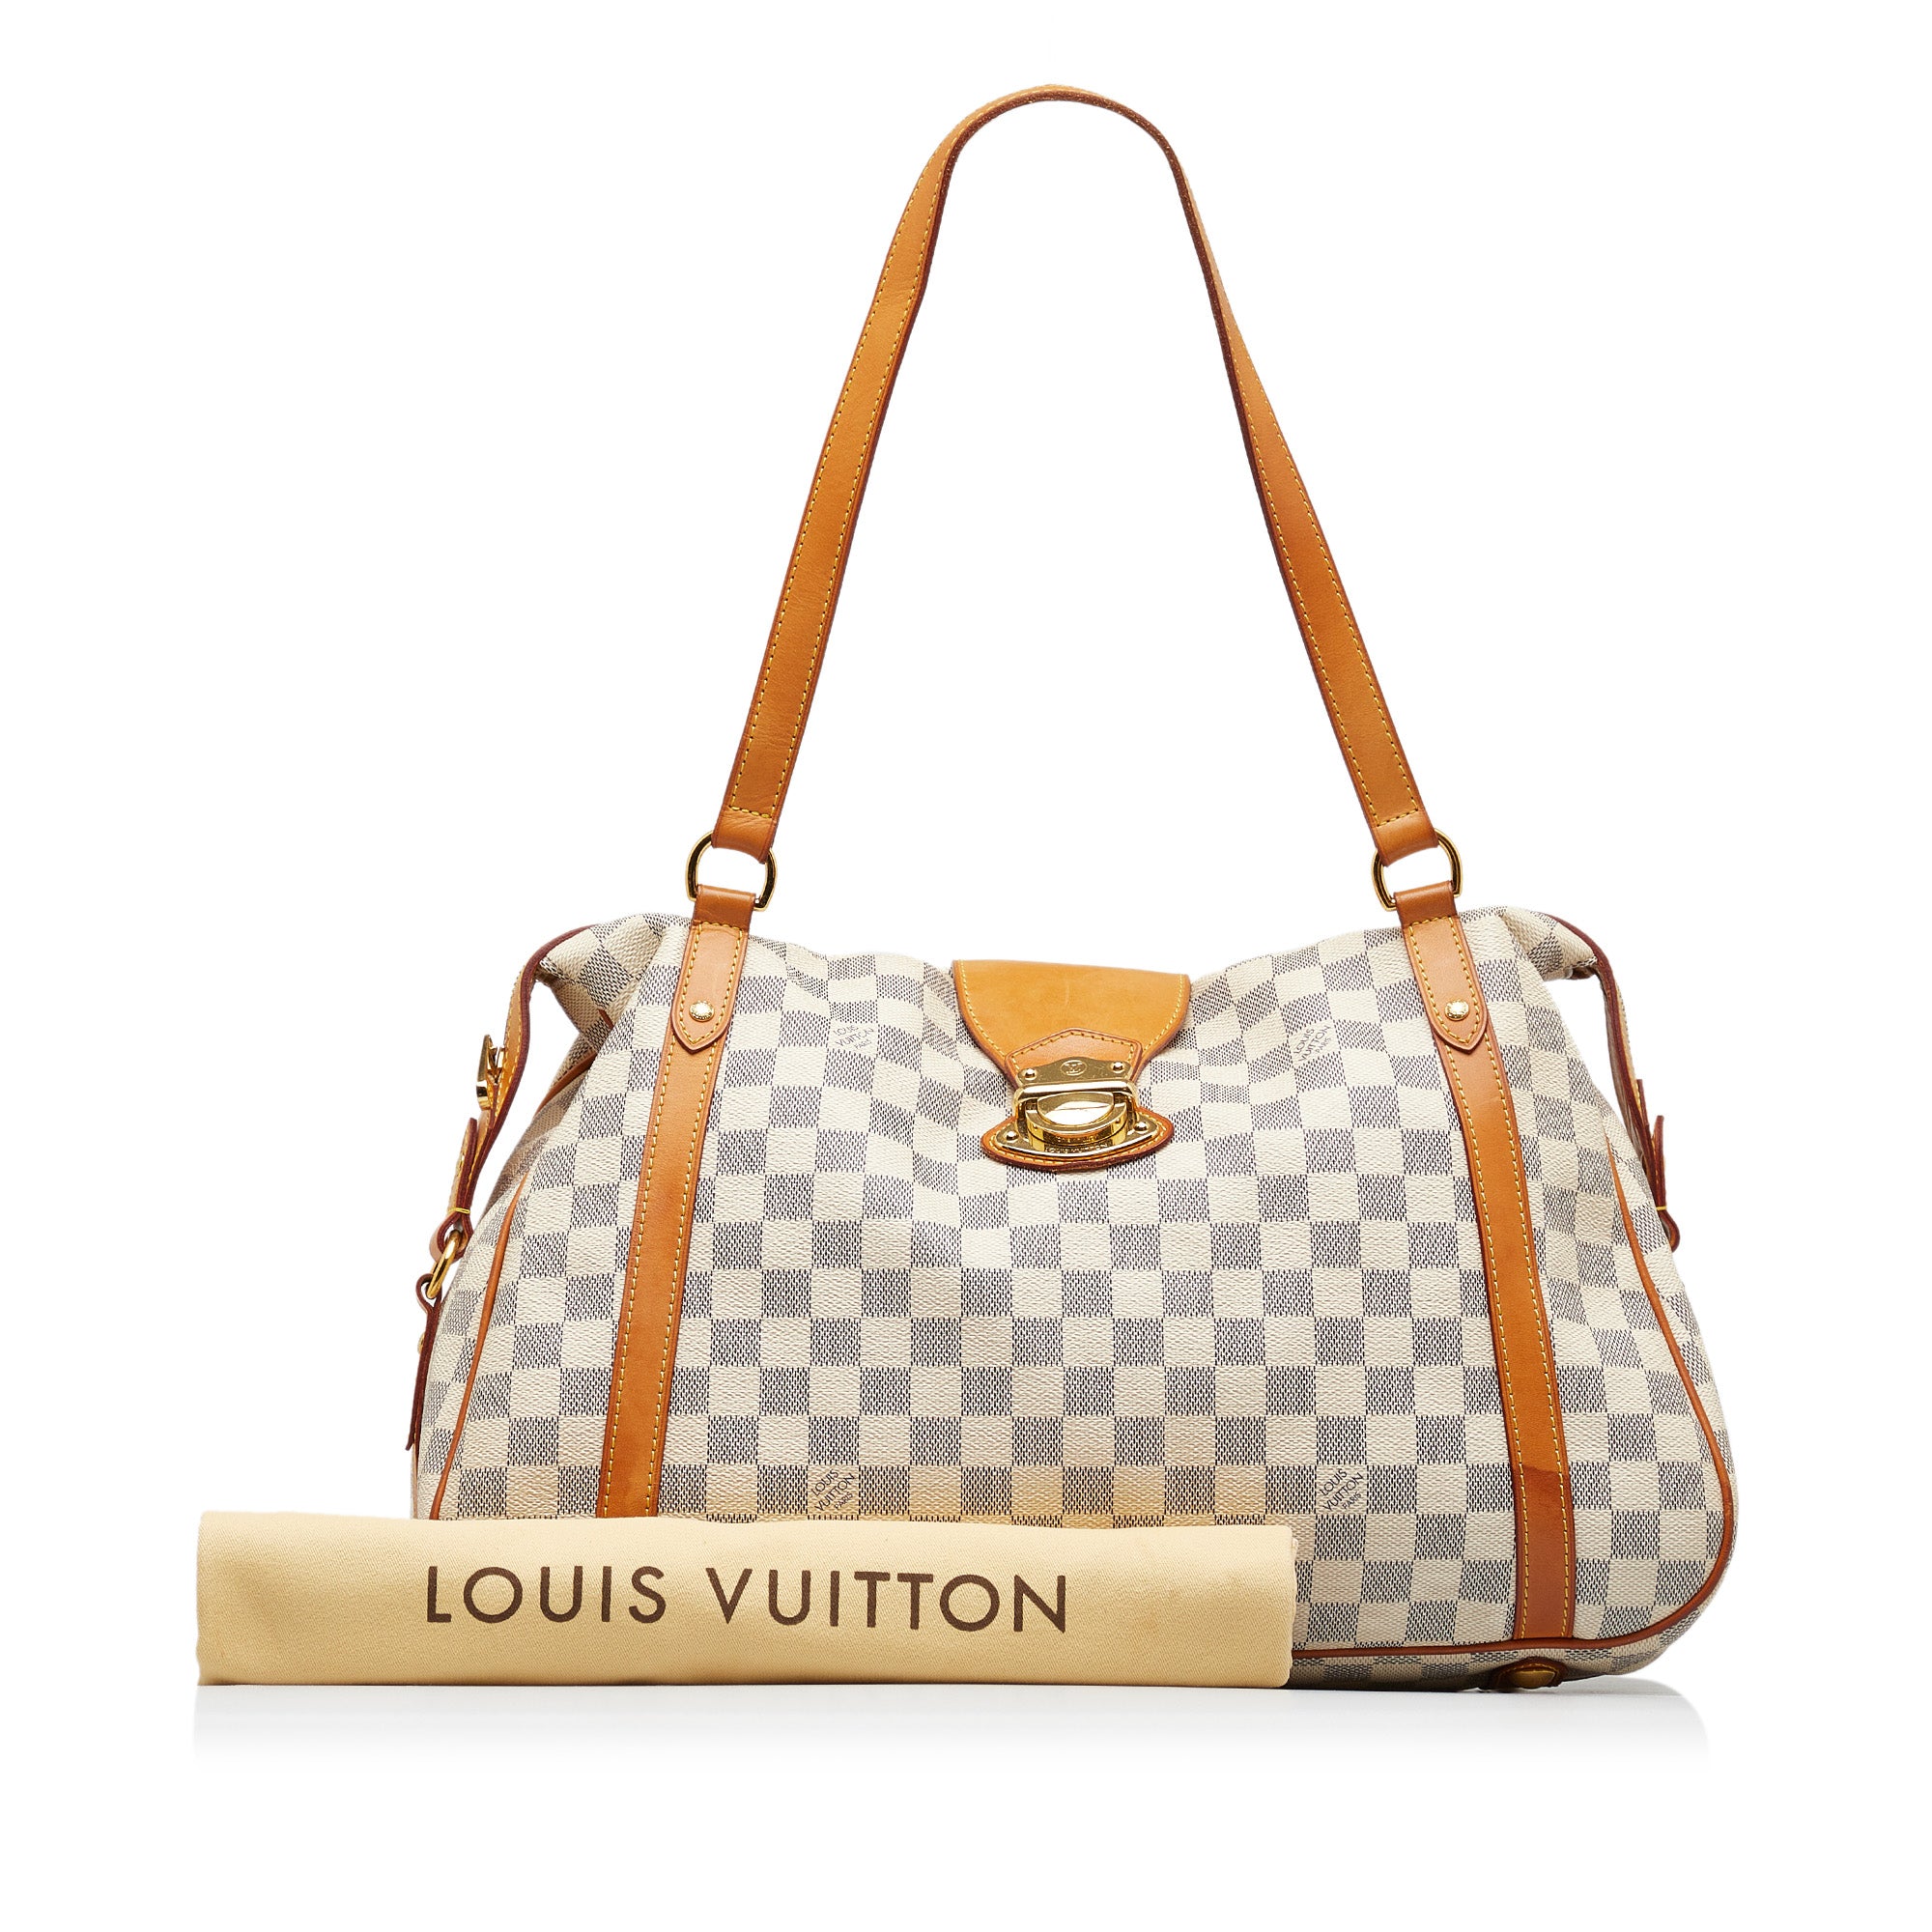 Auth Louis Vuitton Damier Azur Speedy Satchel Bag Exc